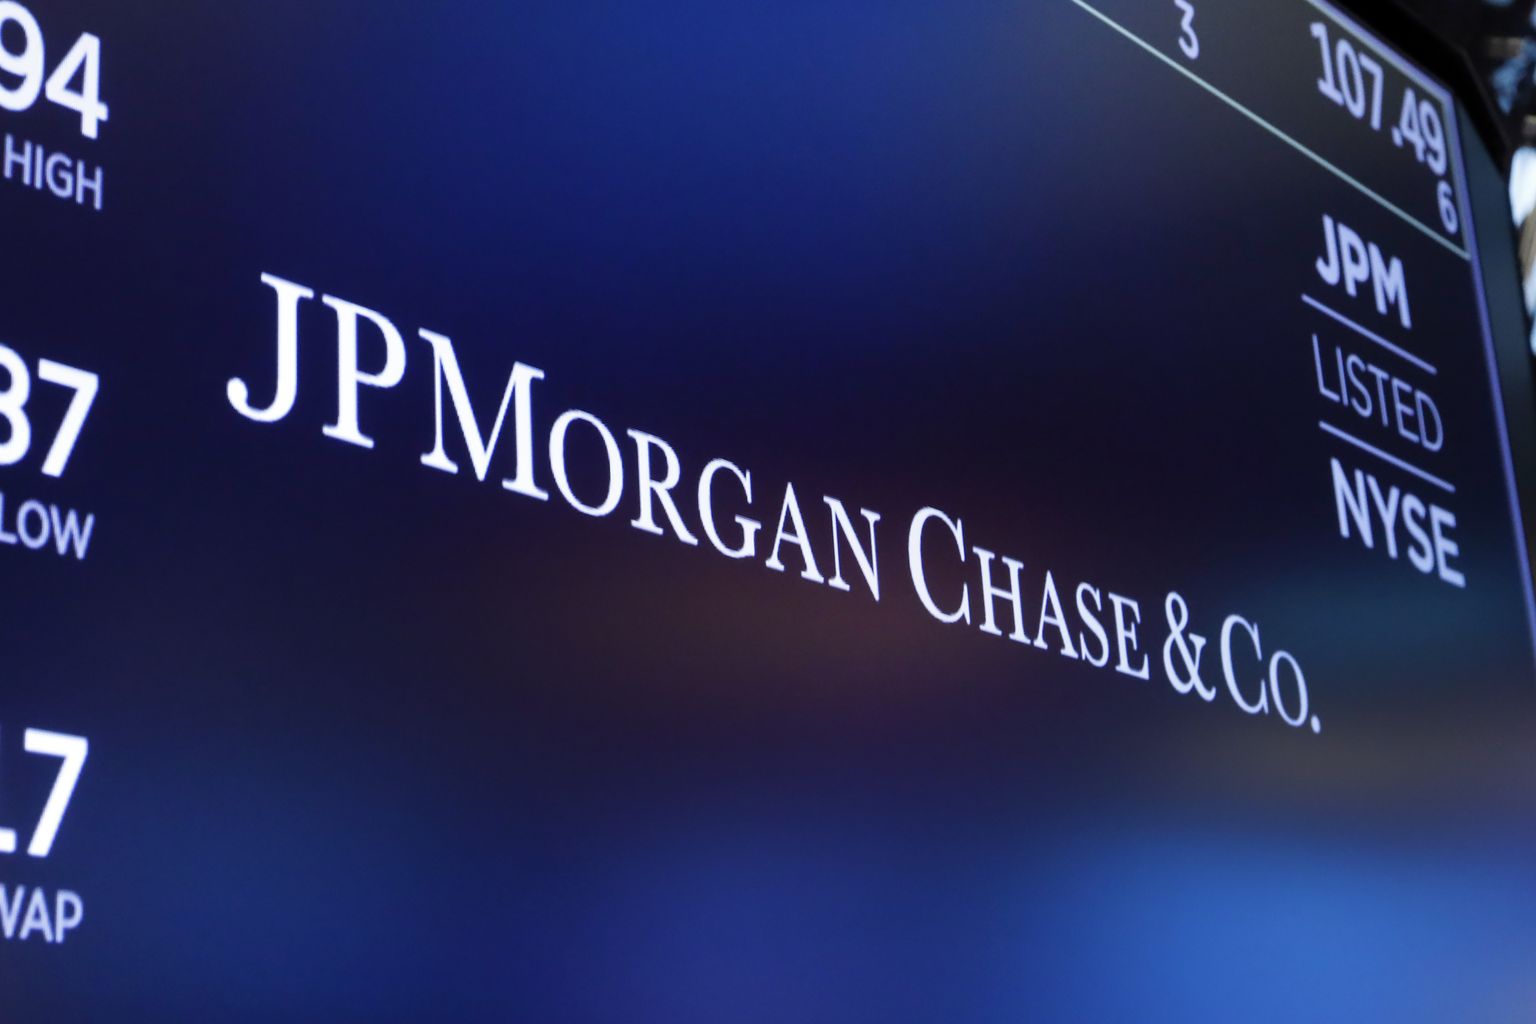 JPMorgan Chase logo New Yorgi börsil 16. augustil 2019.